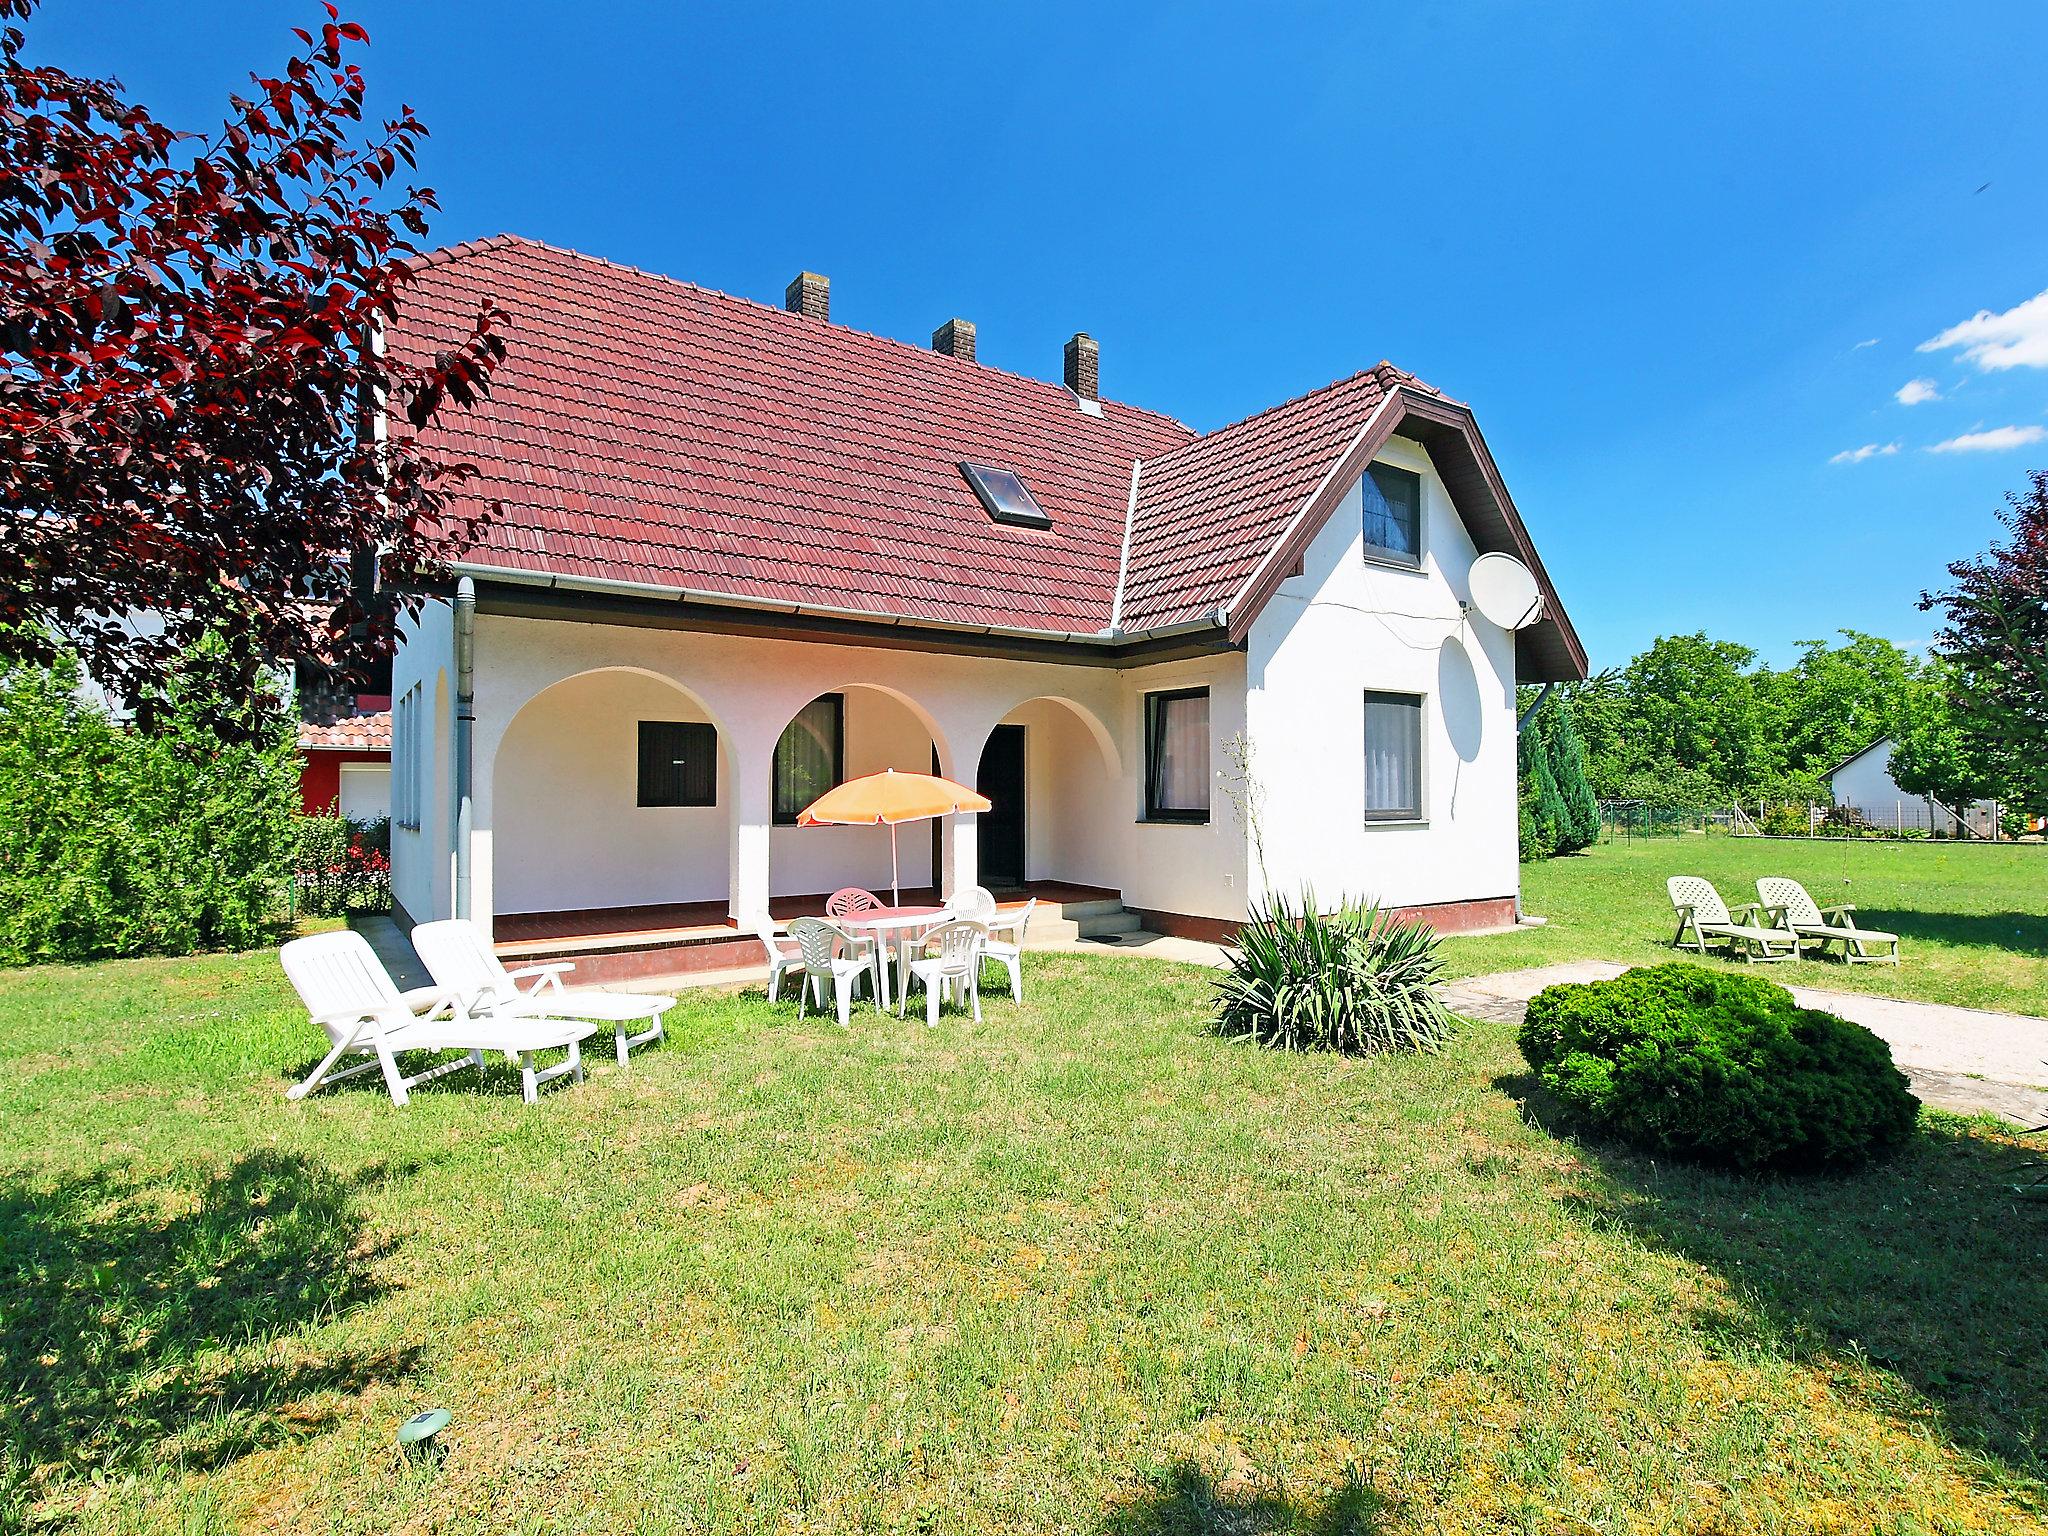 Foto 1 - Casa con 5 camere da letto a Balatonőszöd con giardino e vista sulle montagne